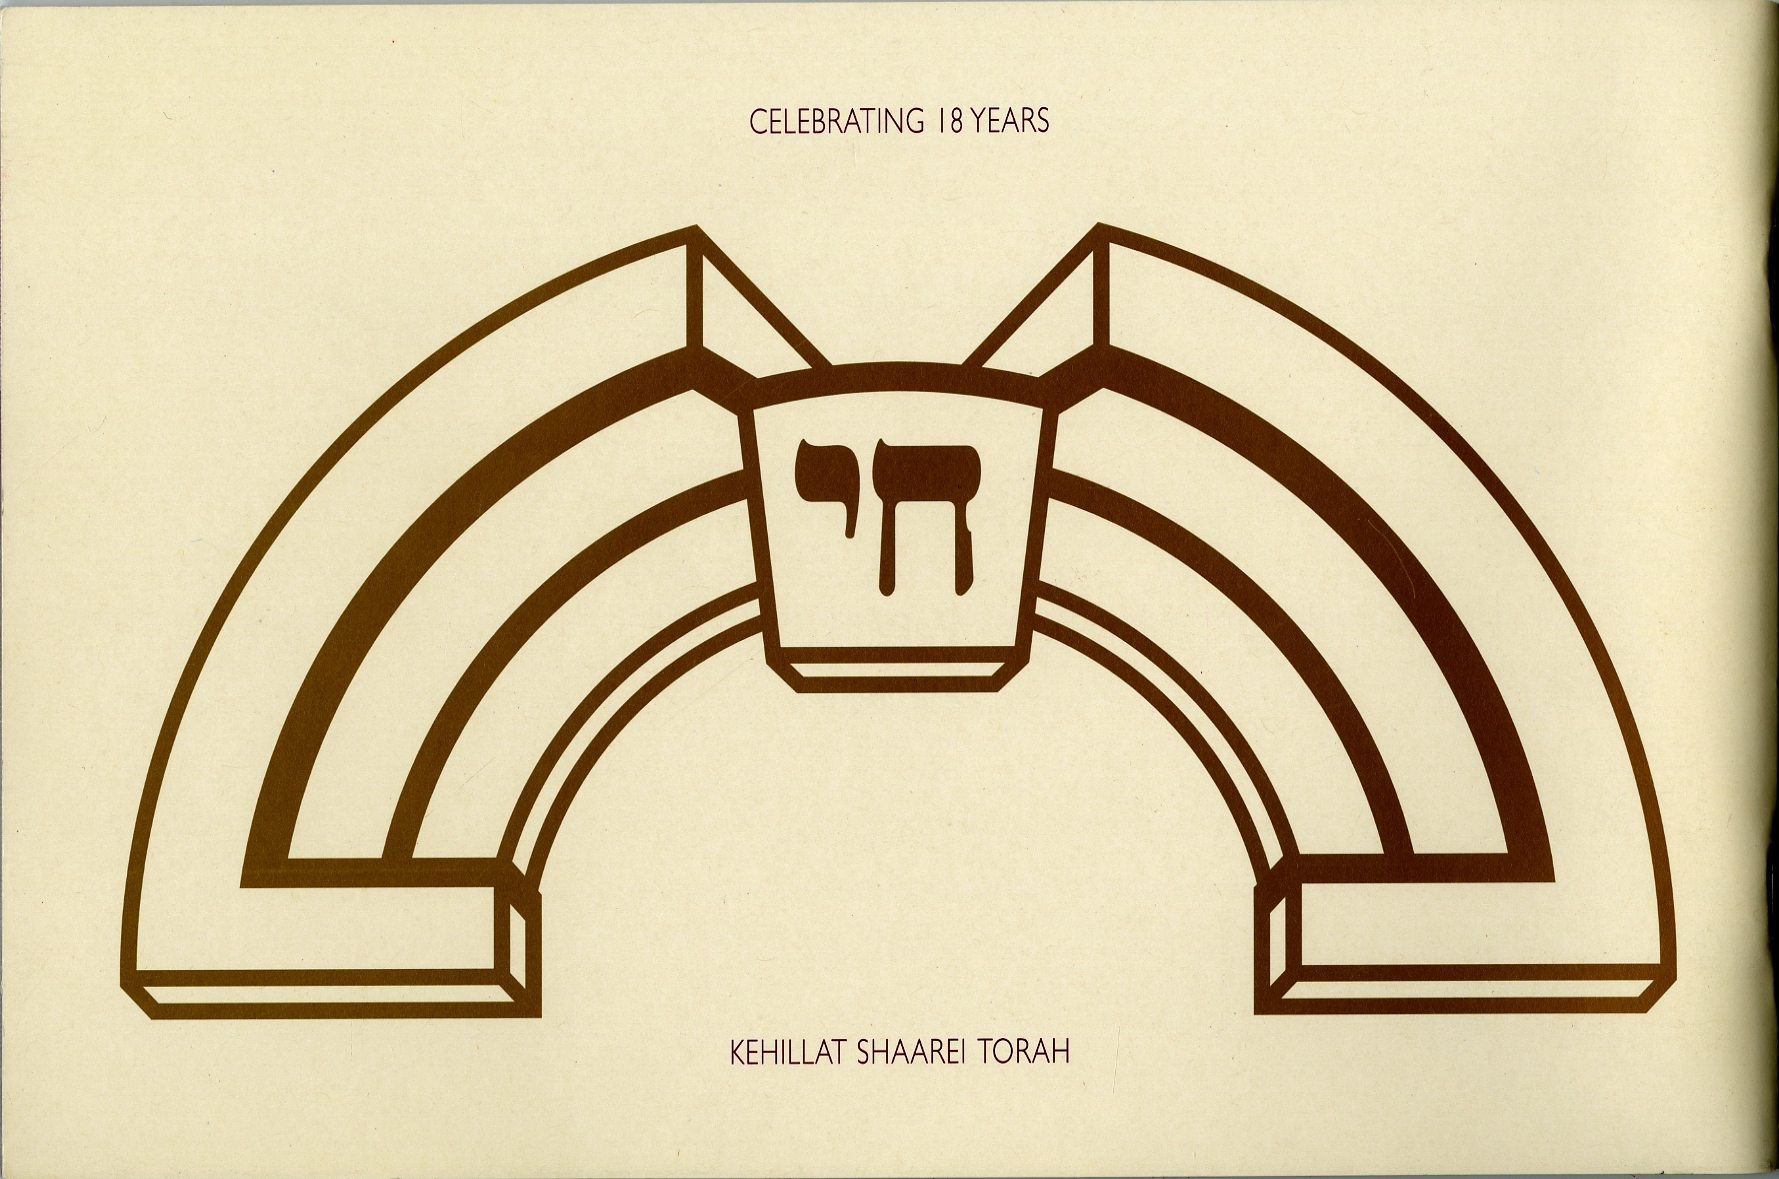 Kehillat Shaarei Torah 18th anniversary book